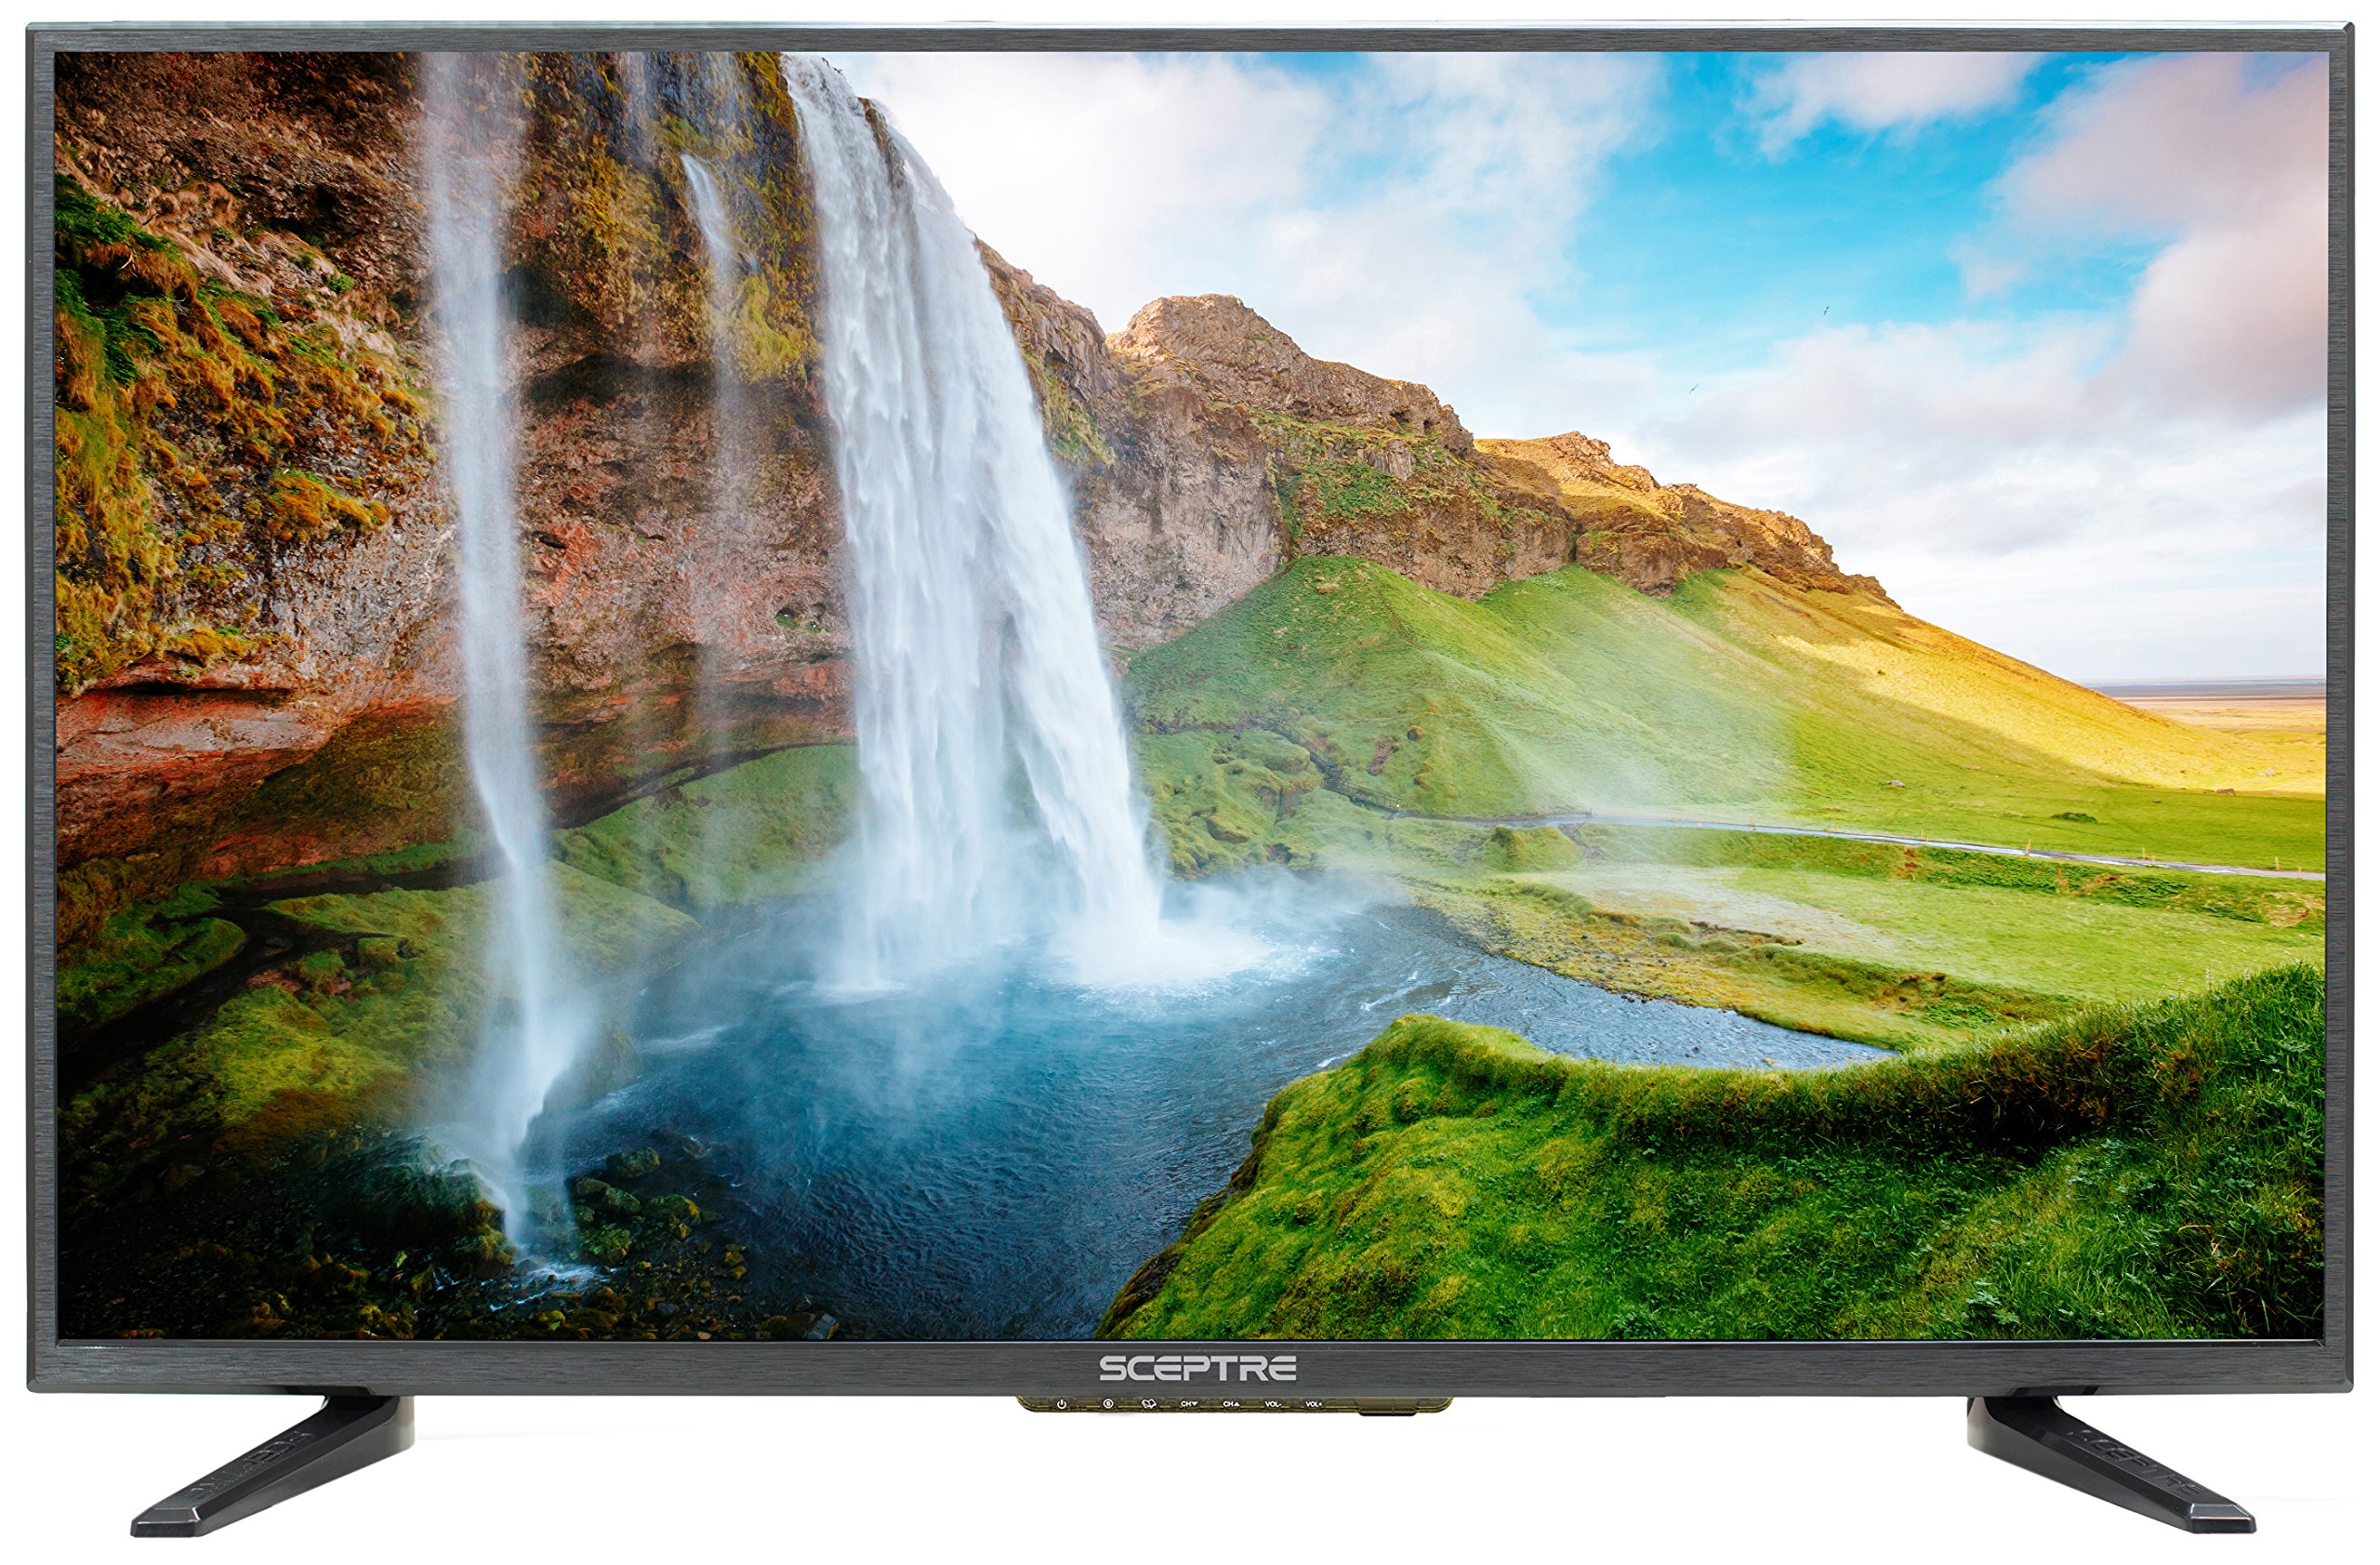 Sceptre 32-Zoll-LED-Fernseher der Klasse HD (720P) (X322BV-SR)